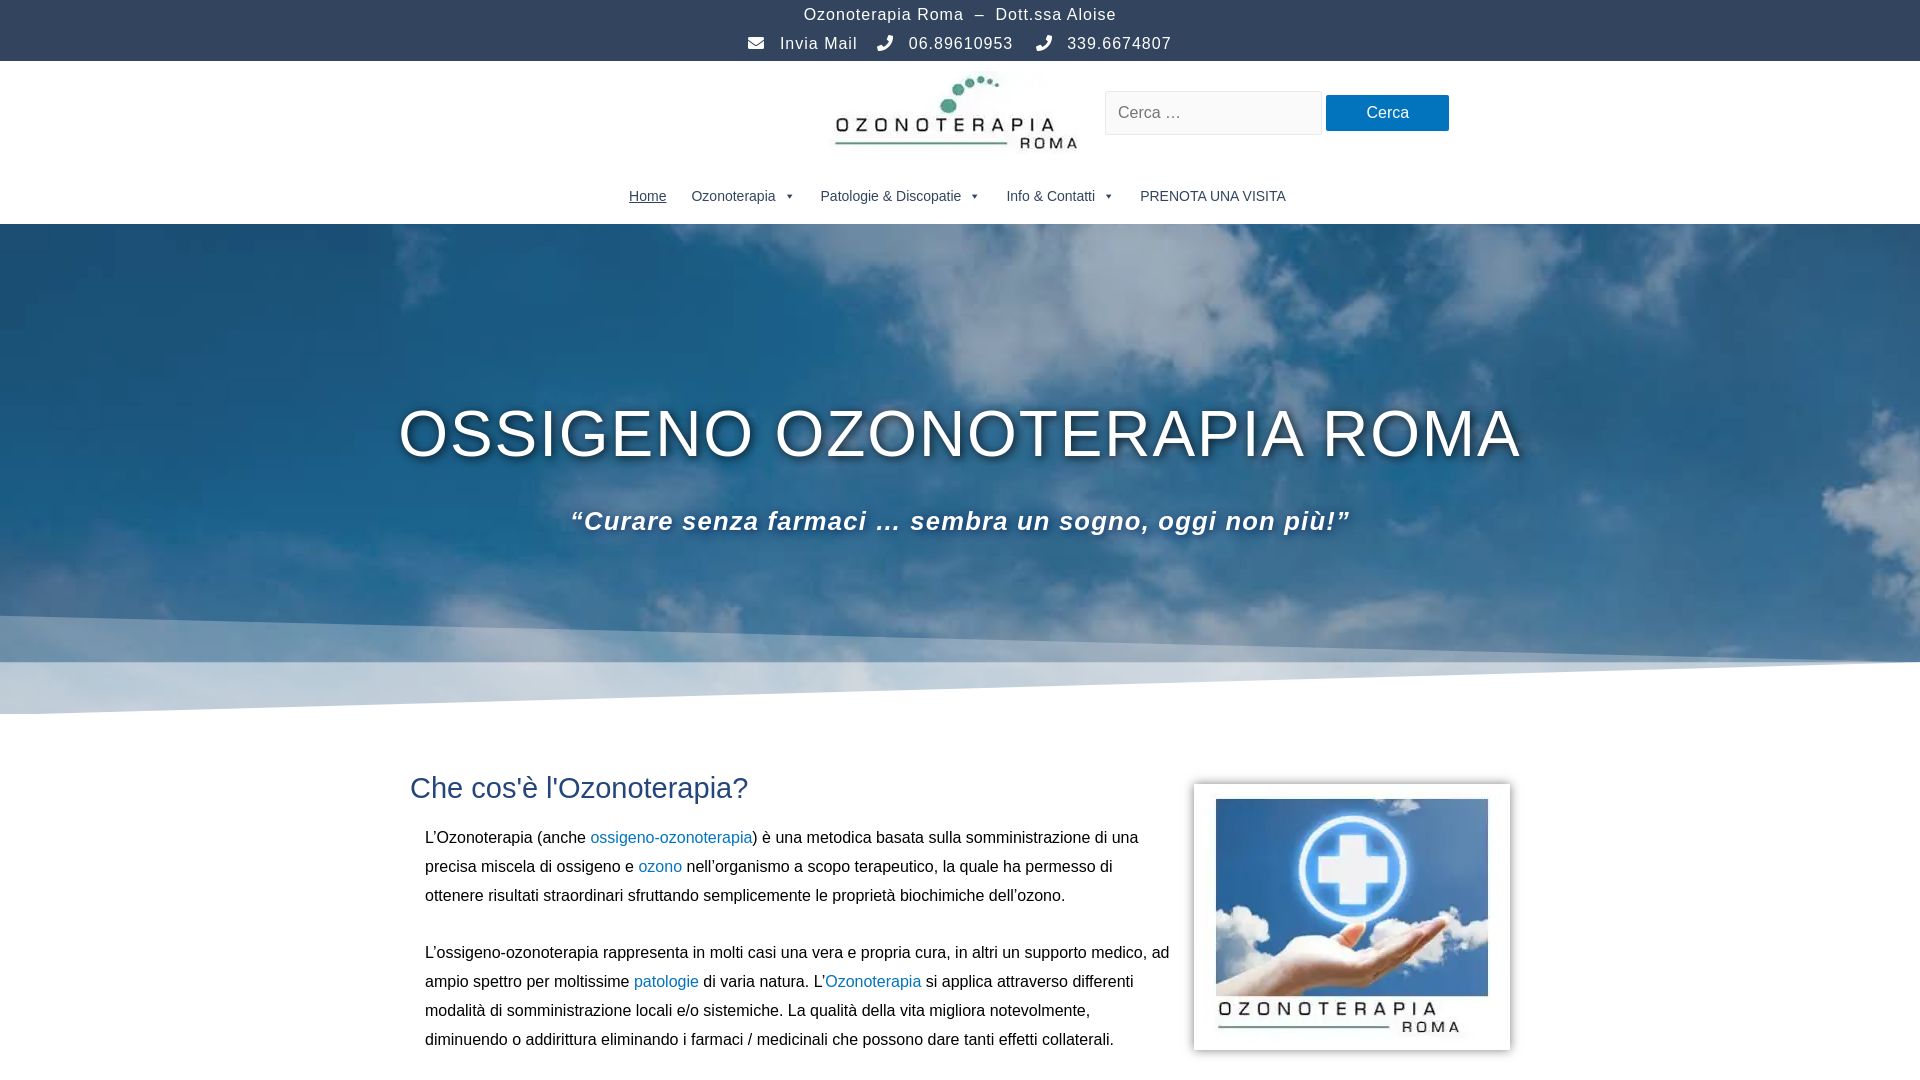 Estado web ozonoterapiaroma.it está   ONLINE